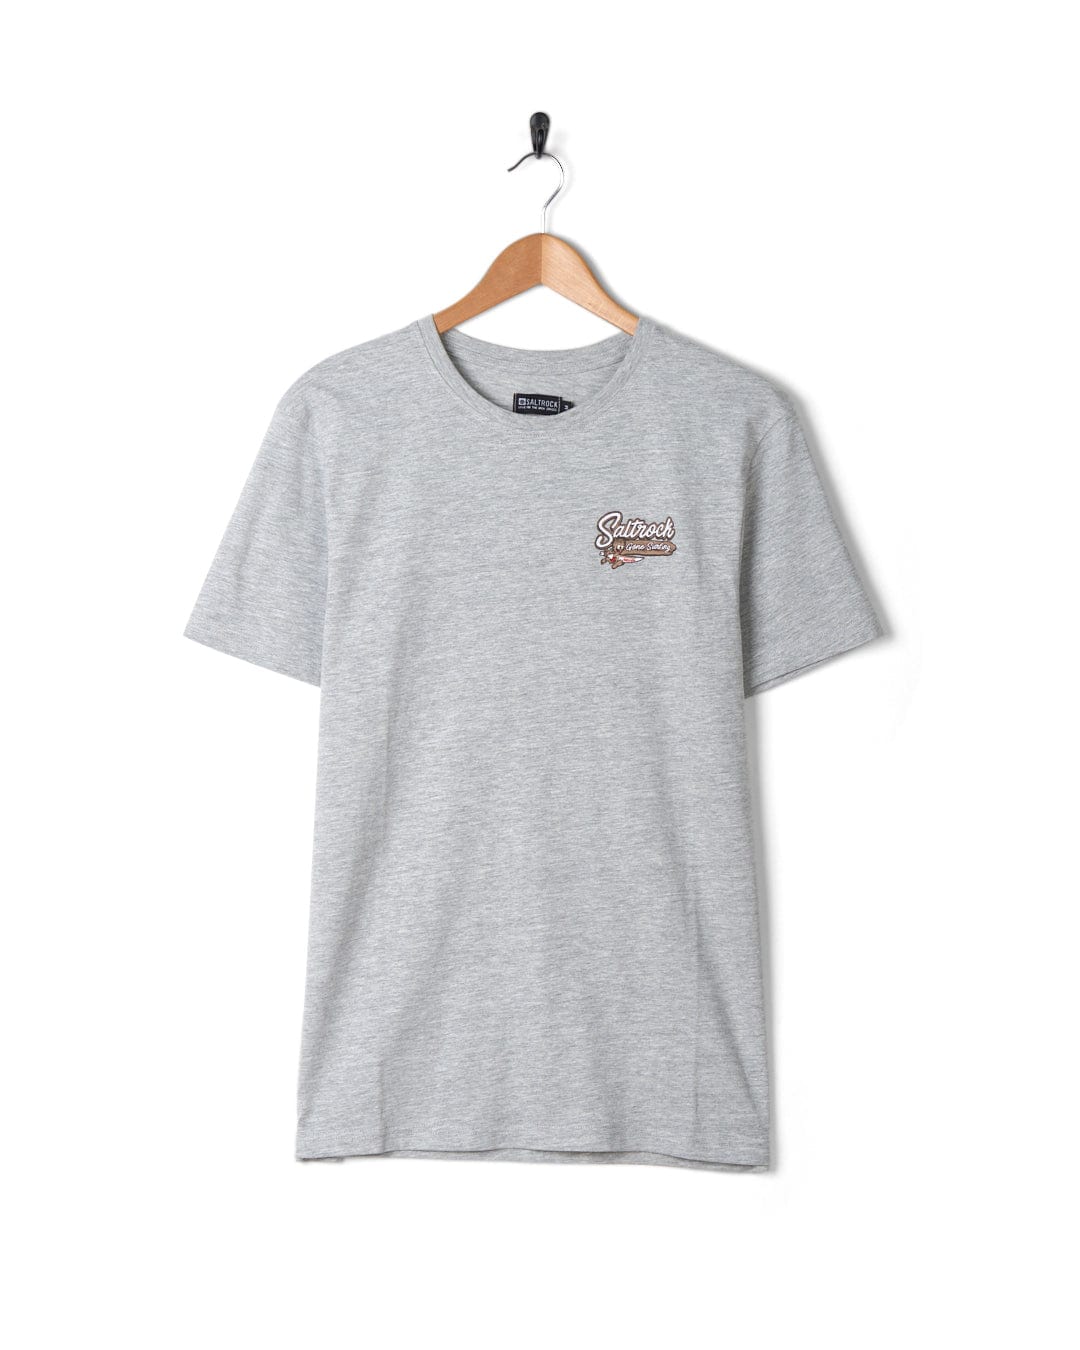 A grey Beach Signs Wales - Mens Short Sleeve T-Shirt - Grey Marl with a Saltrock branding logo on it.